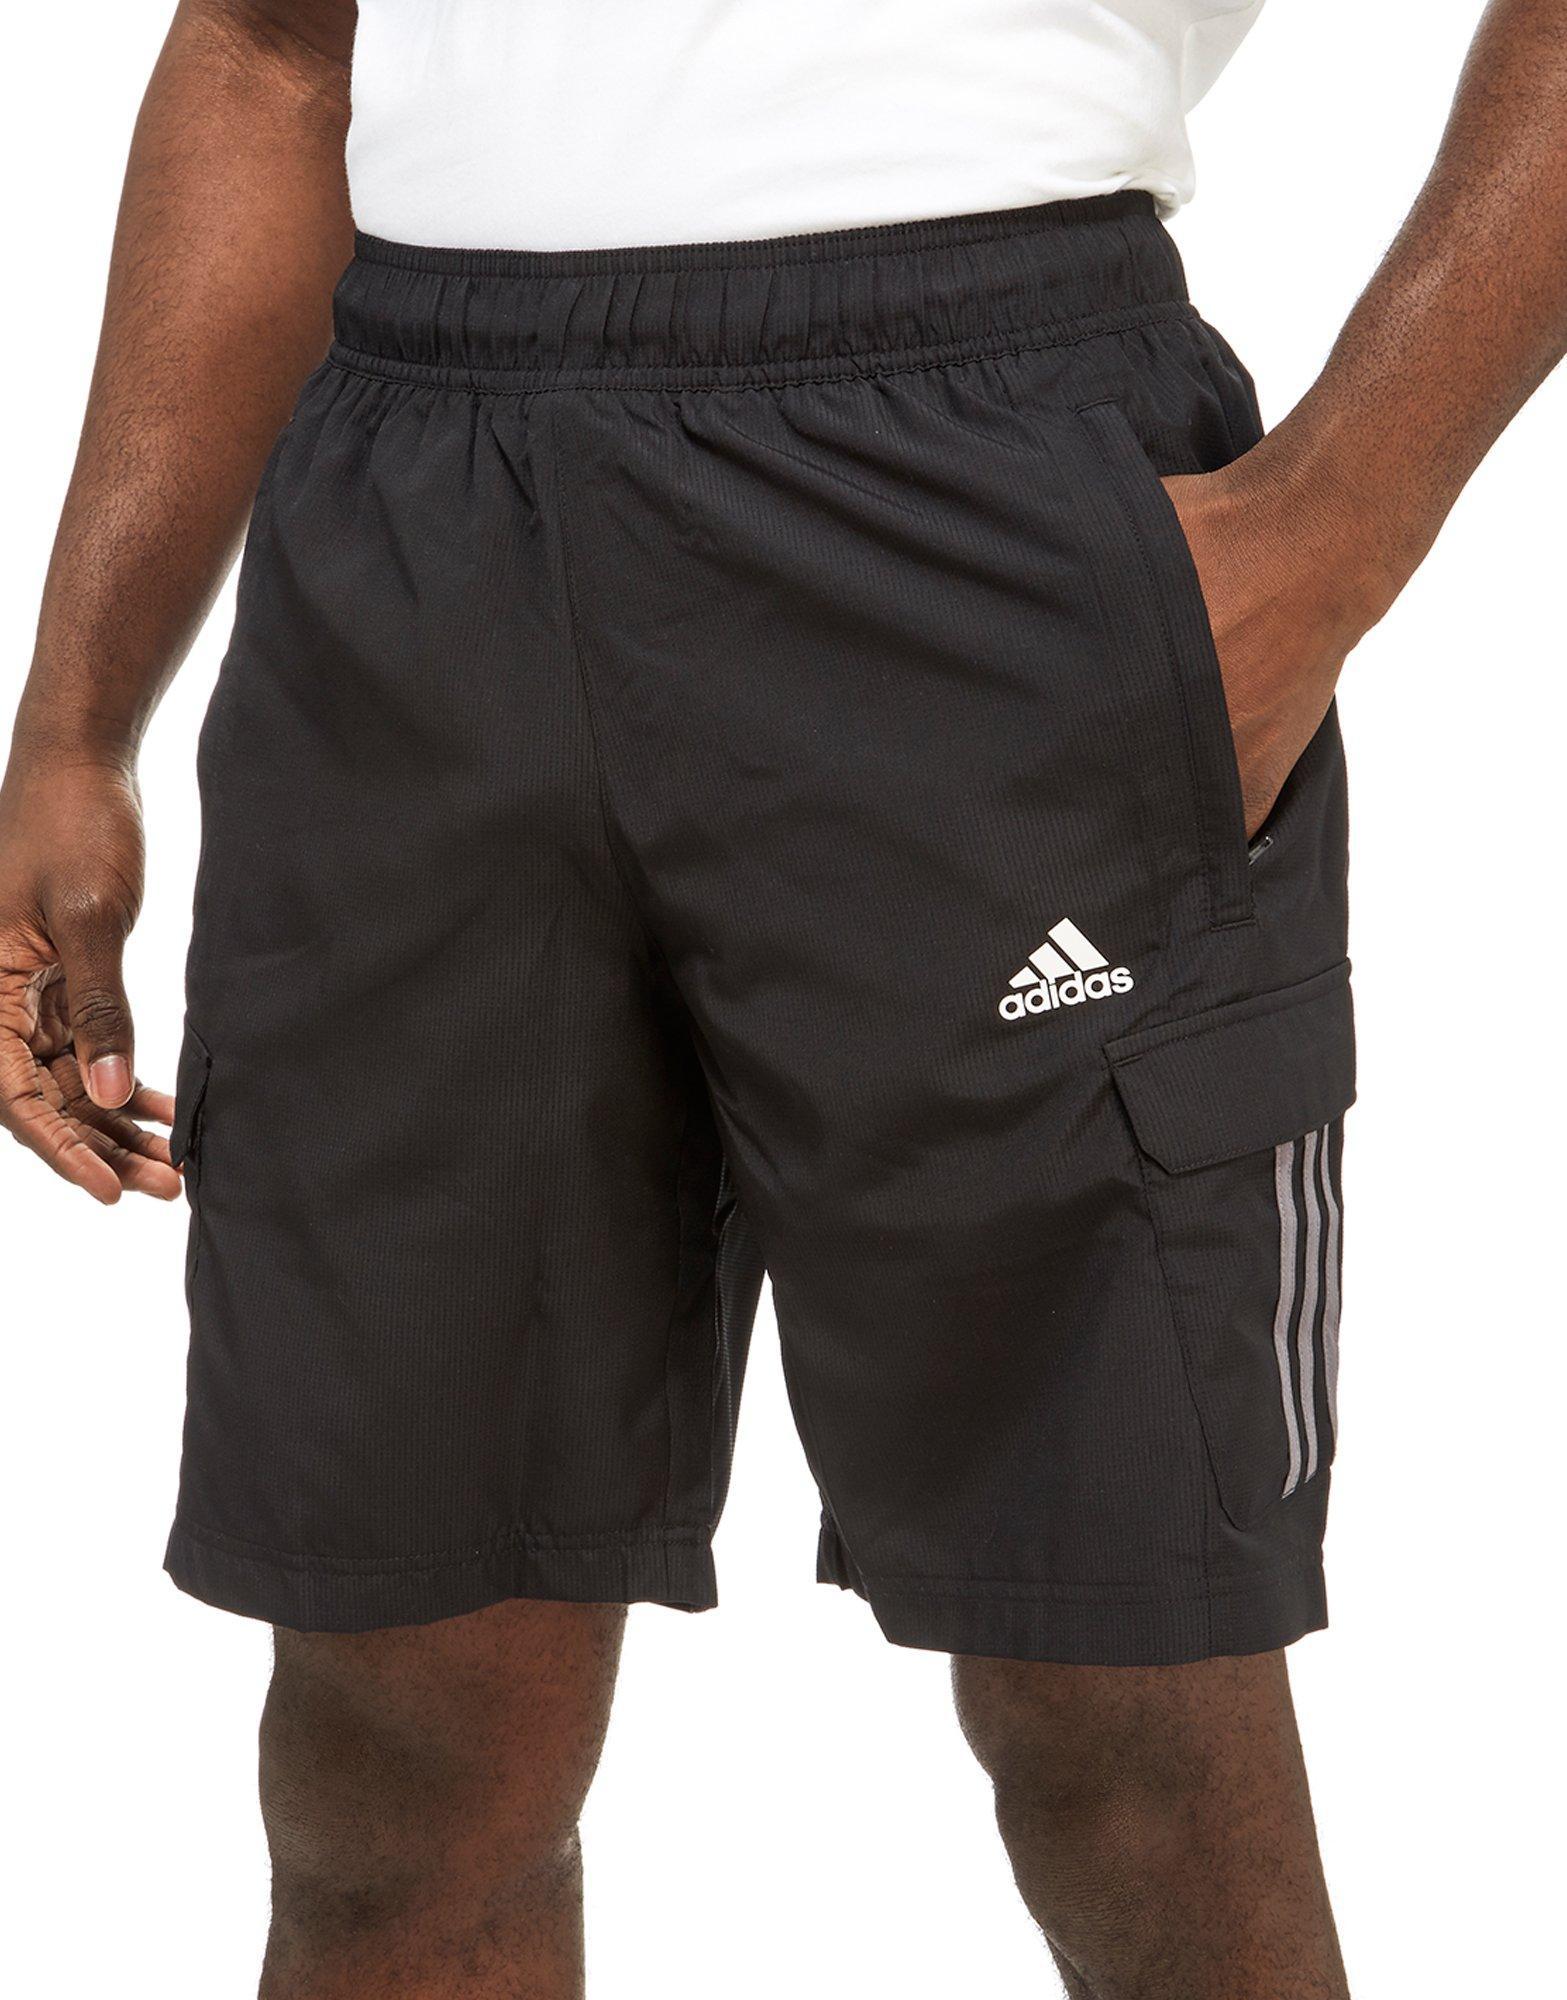 adidas Synthetic Cargo Shorts in Black/Grey (Black) for Men - Lyst